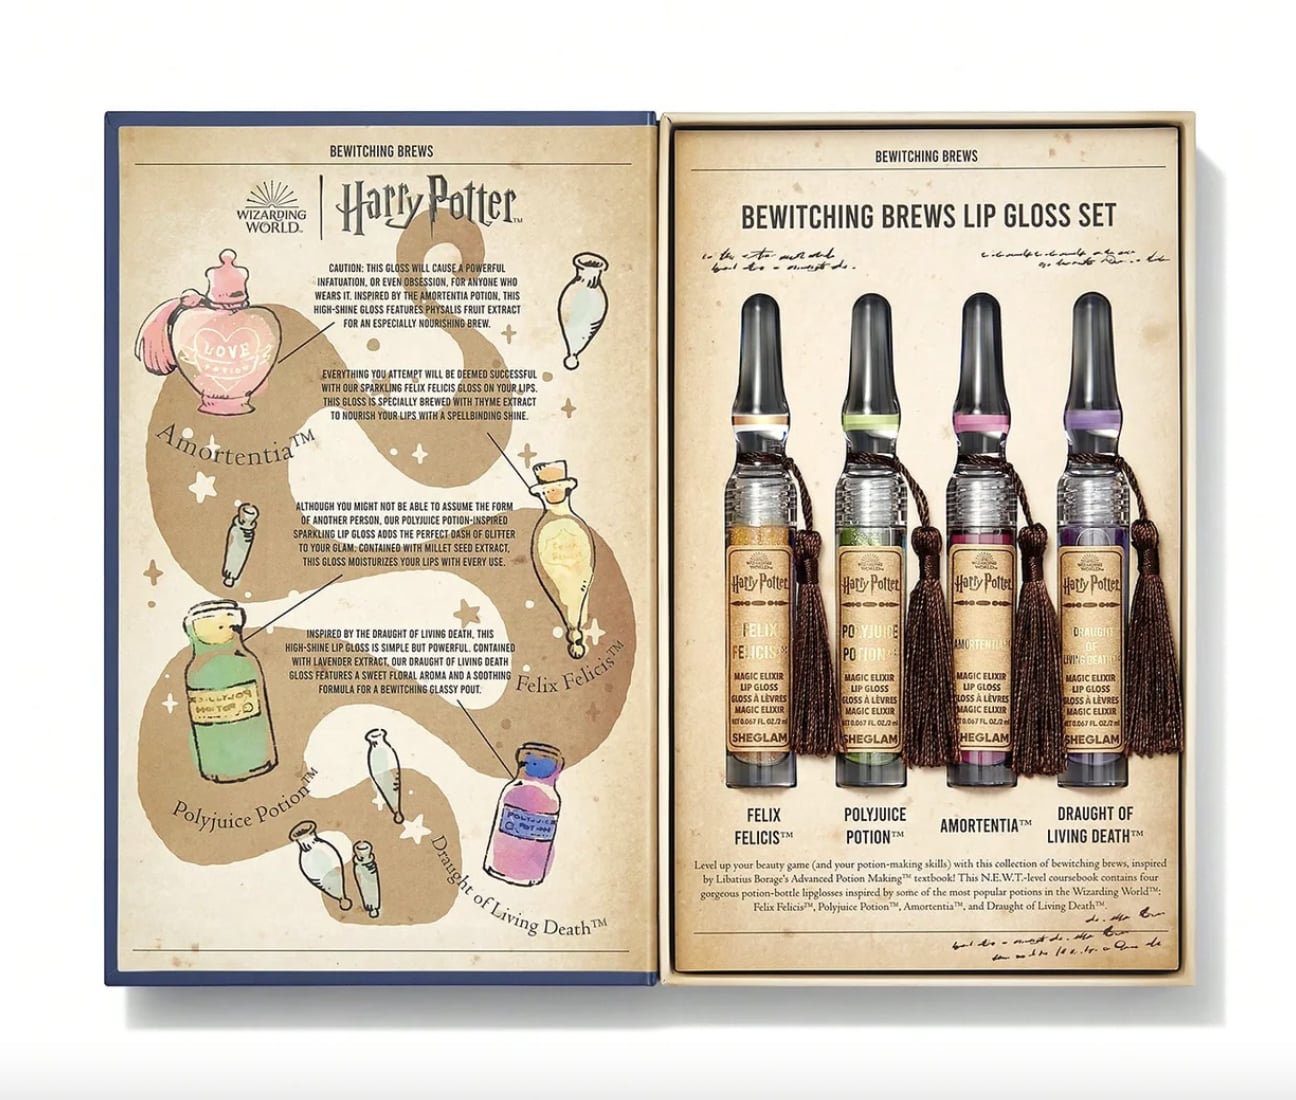 Harry Potter Magic Elixir Lip Gloss-Polyjuice Potion ,one-size